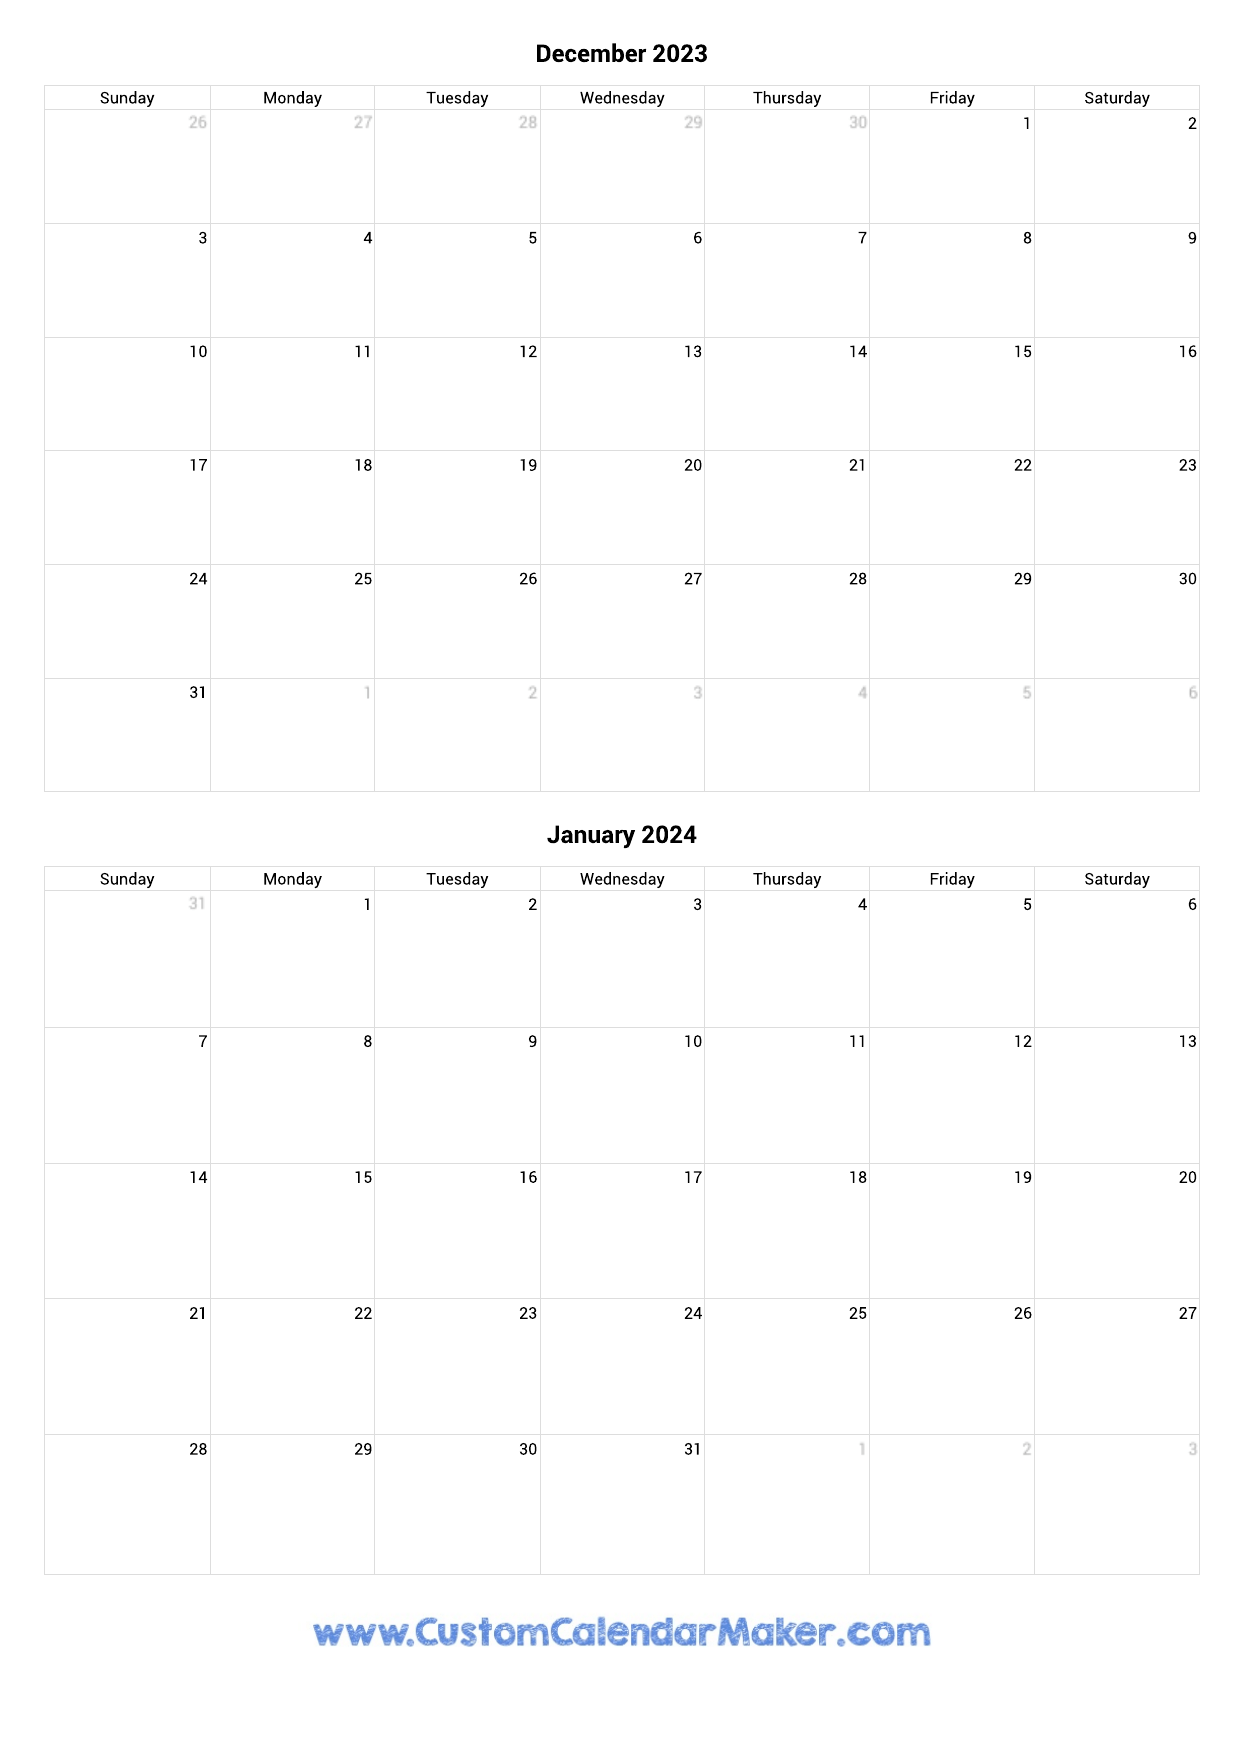 December 2023 And January 2024 Printable Calendar Template for Free Printable Calendar December 2023 January 2024